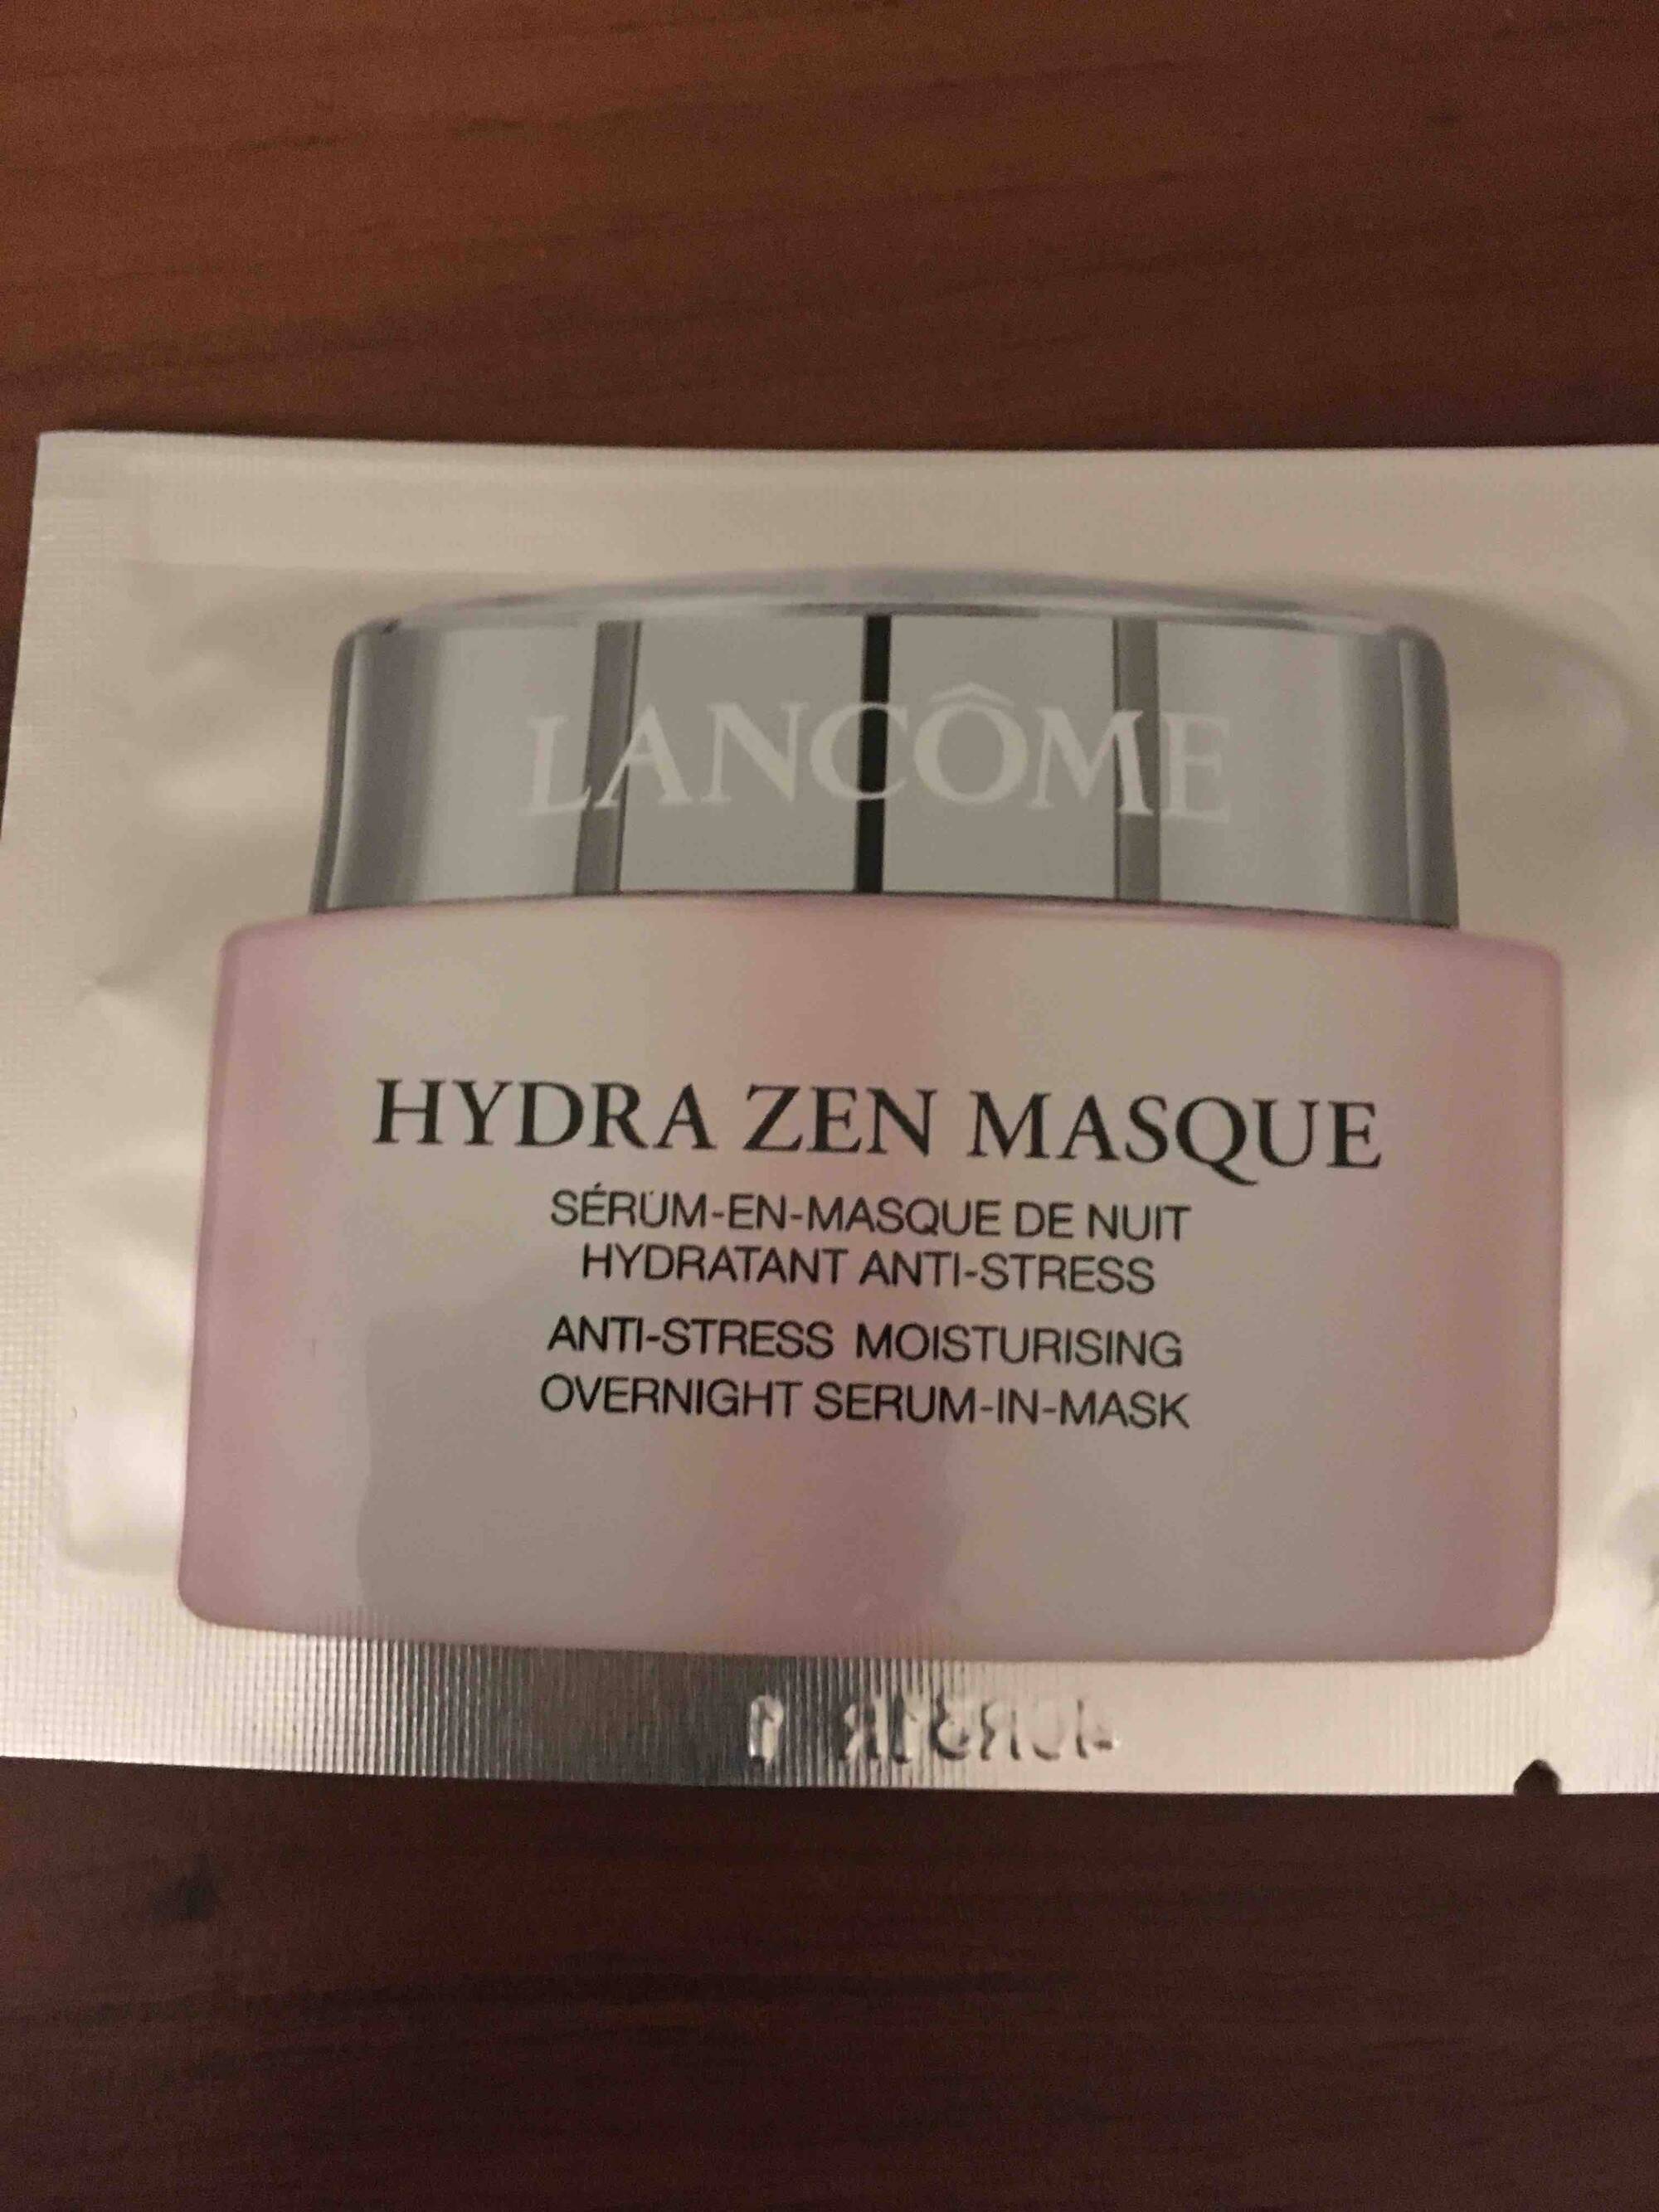 LANCÔME - Hydra zen masque - Sérum-en-masque nuit hydratant anti-stress